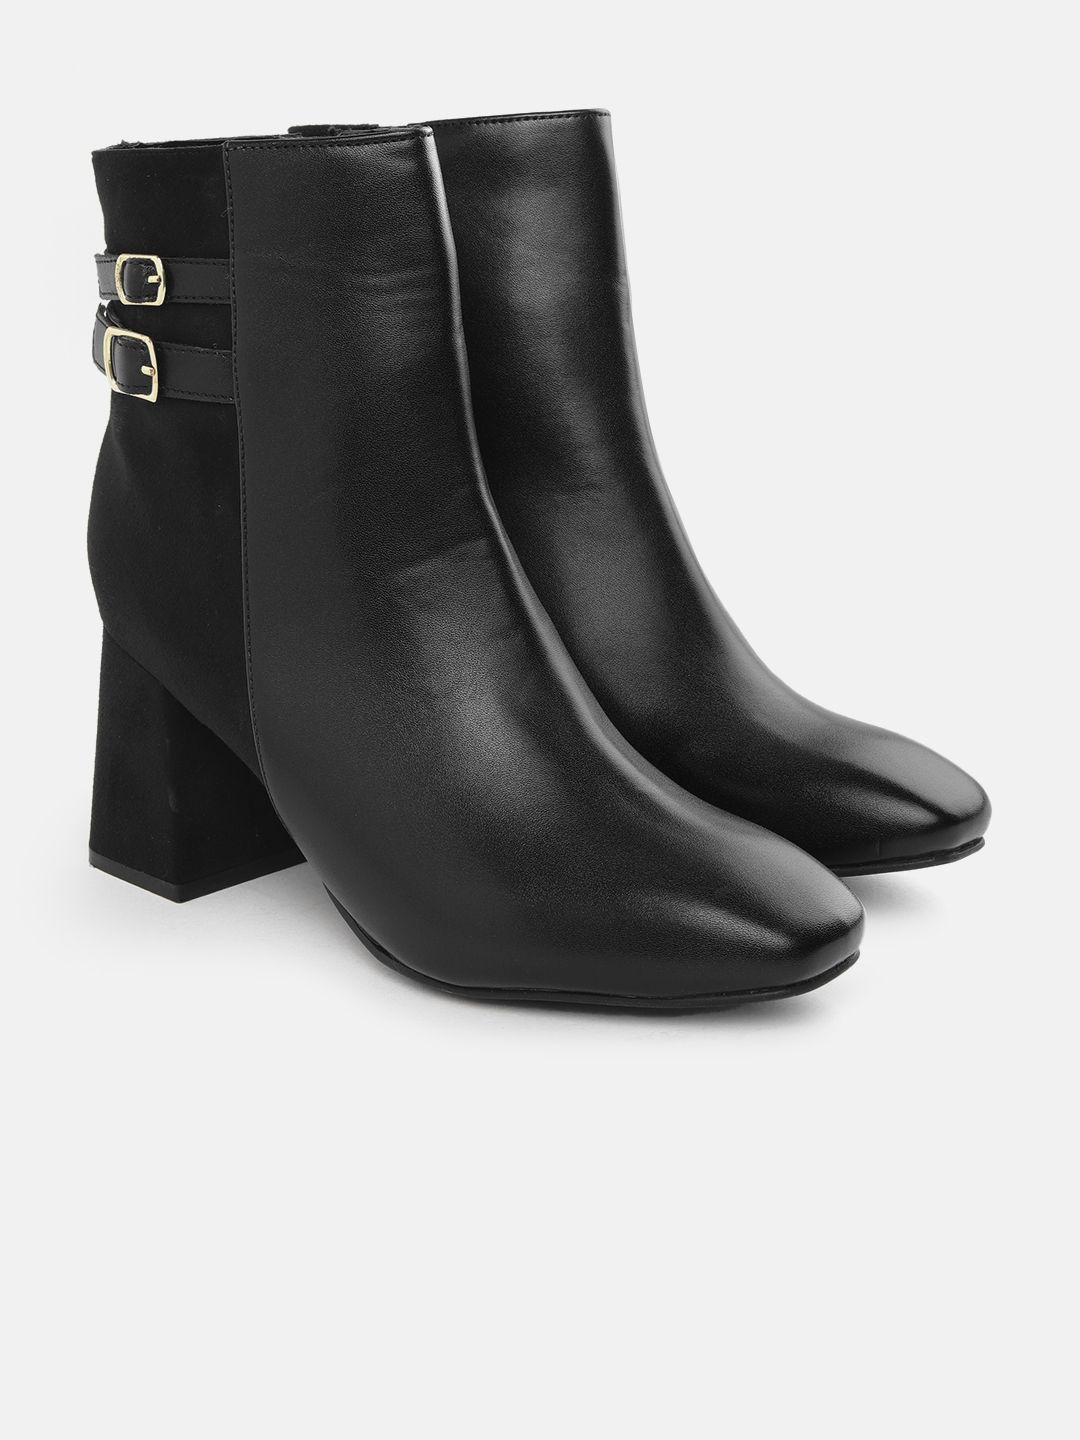 mast & harbour women black solid heeled boots